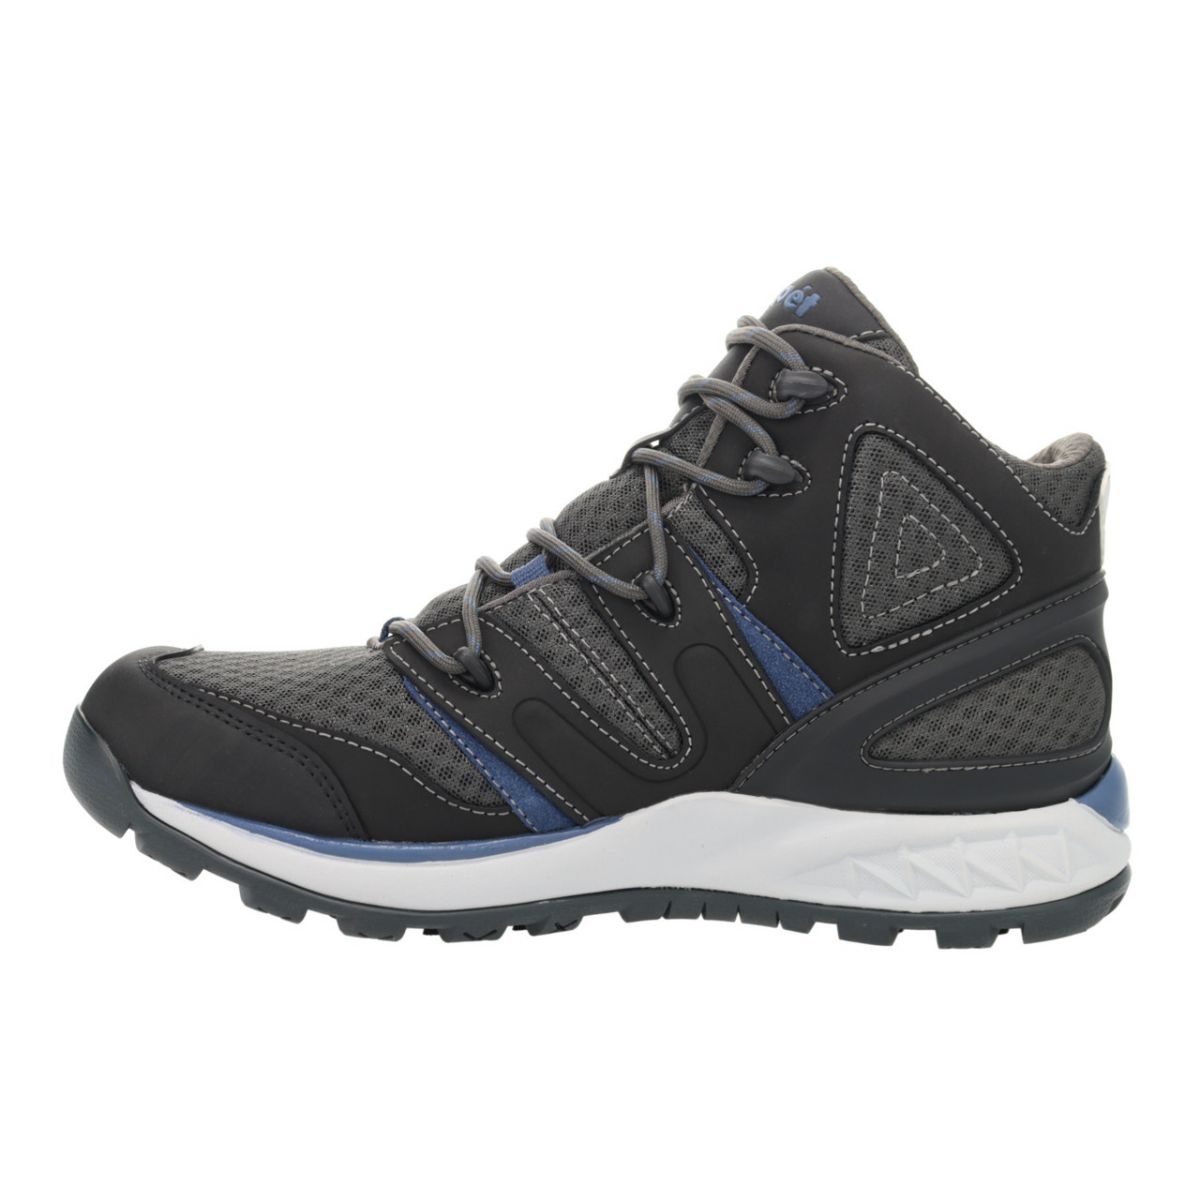 Propet Men's Veymont Waterproof Hiking Boot Grey/Blue - MOA022SGRB GREY/BLUE - GREY/BLUE, 15 XX-Wide